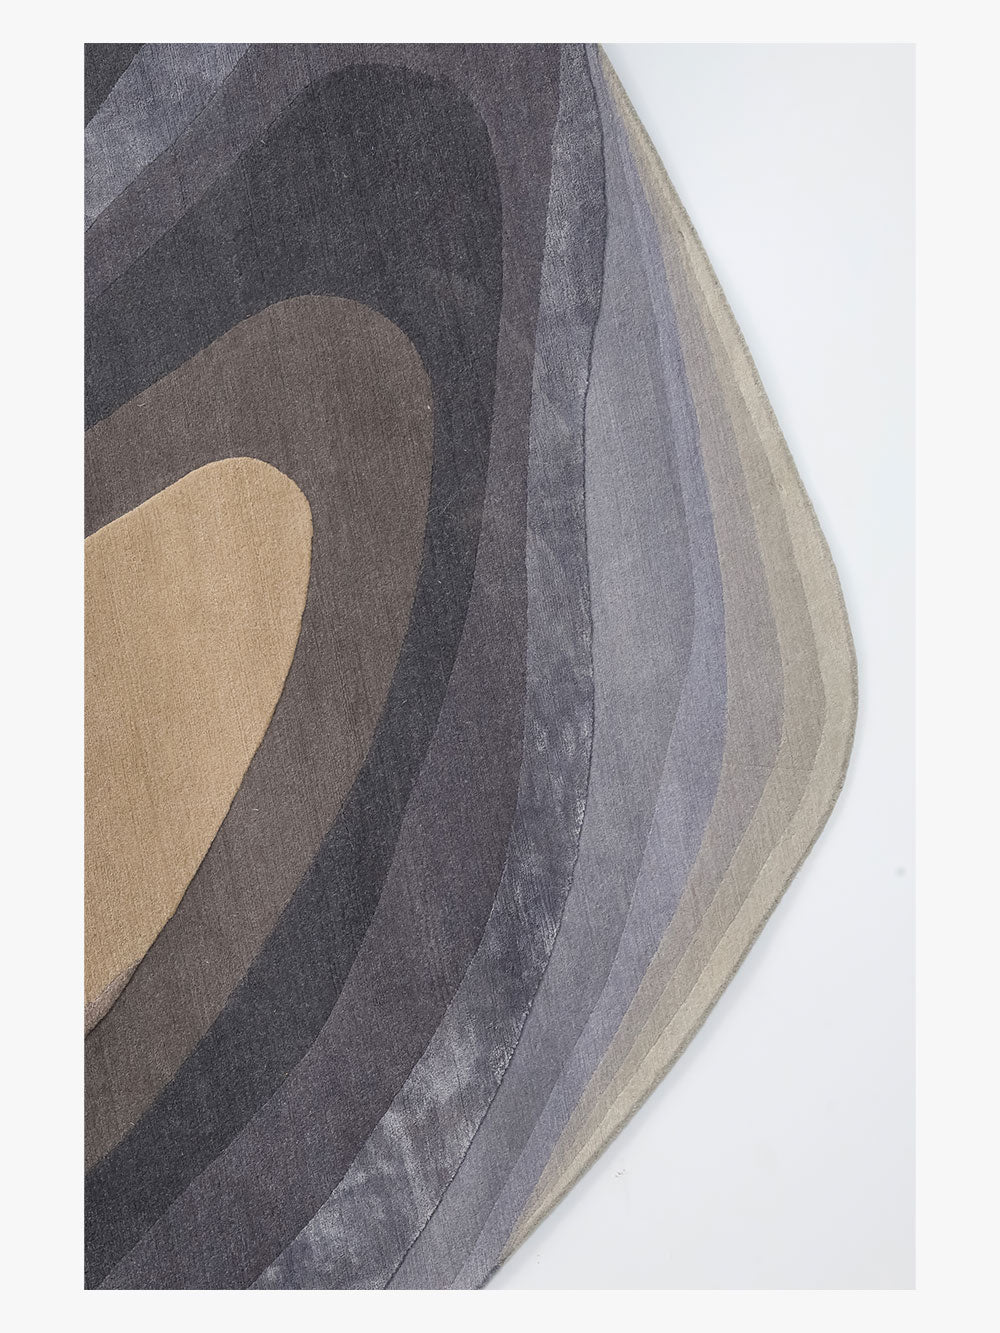 Strata round in Grey designed by Roula Salamoun/250cm